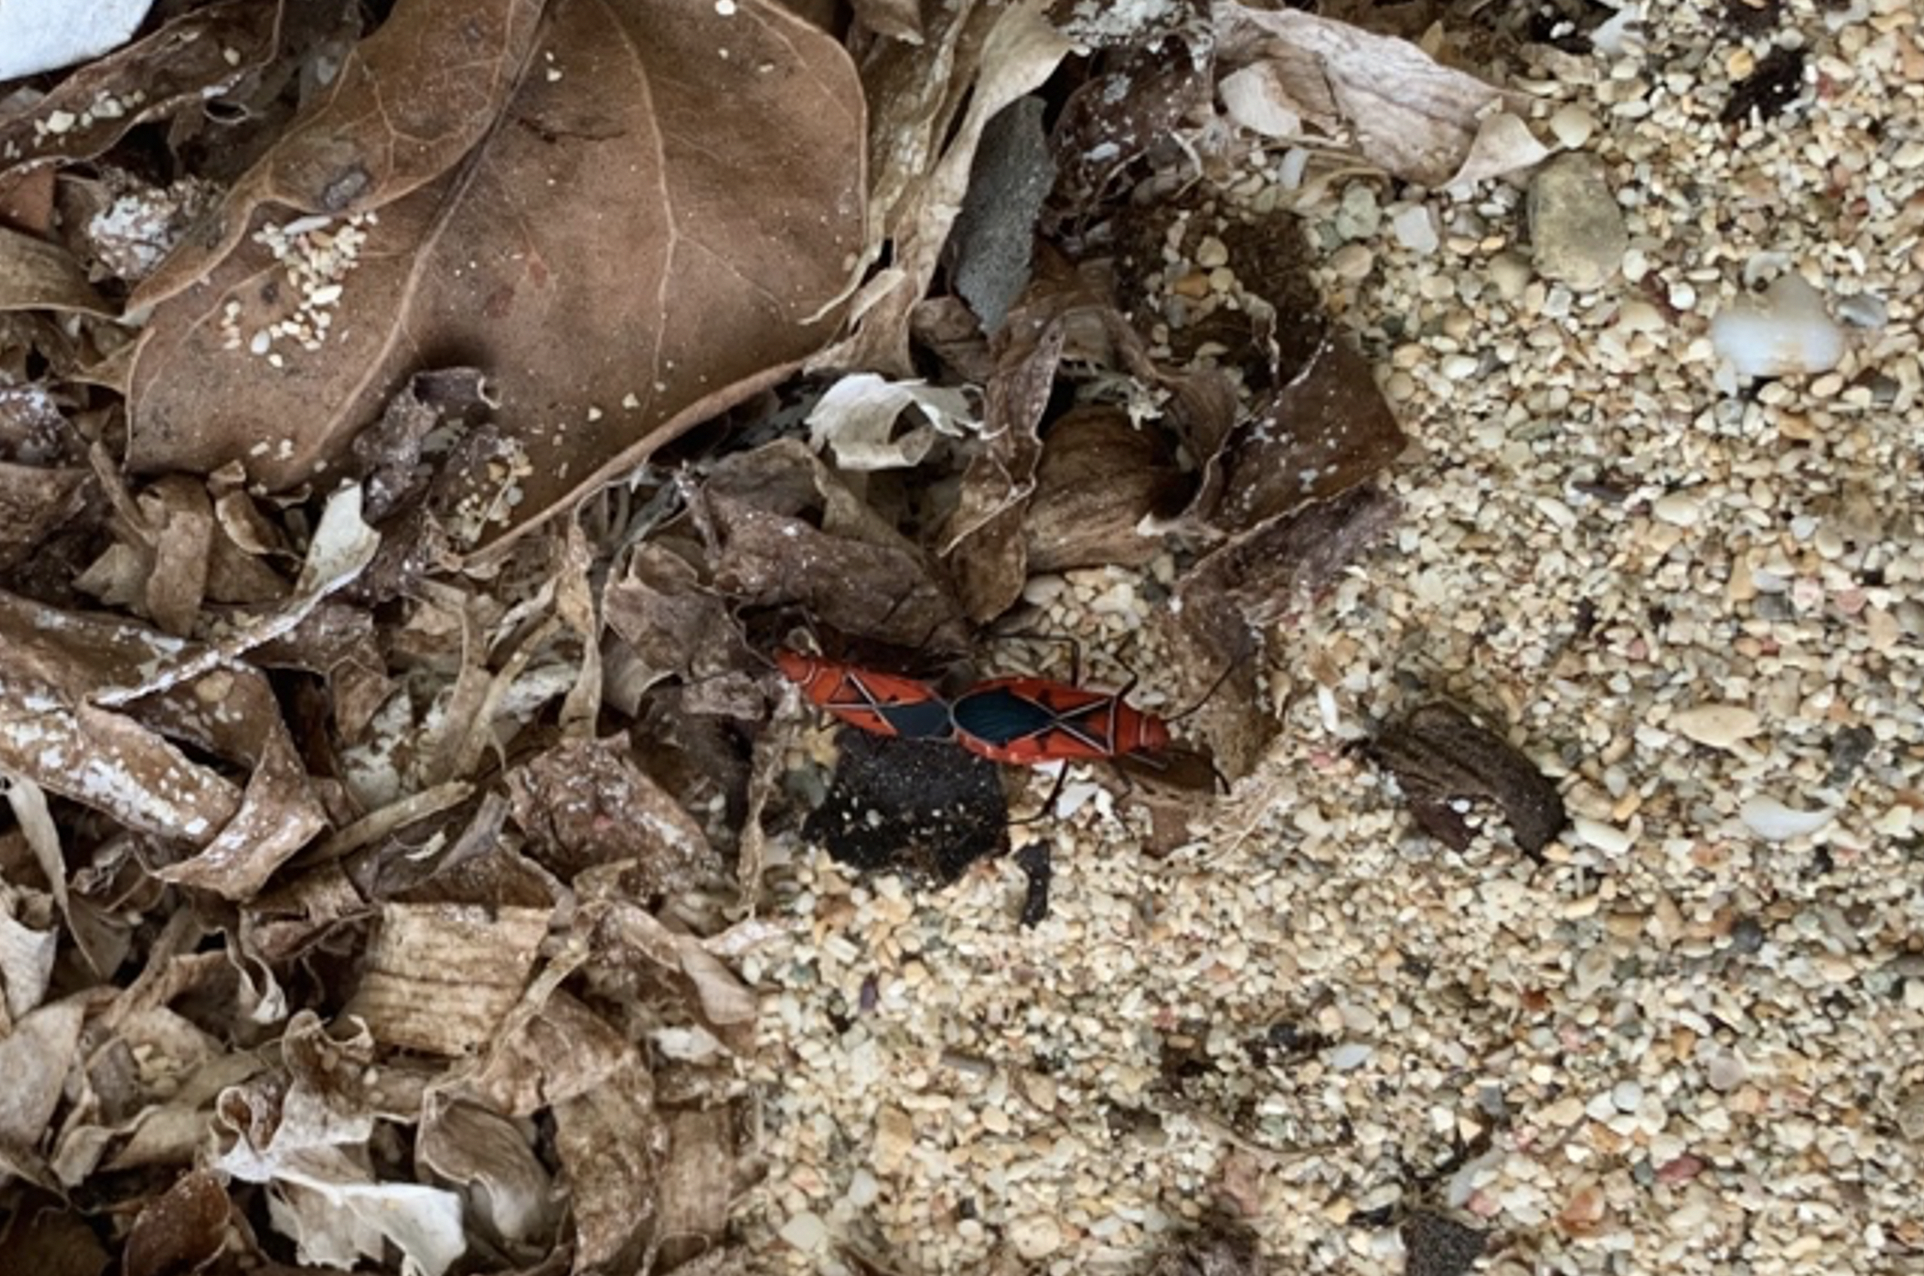 Red Bugs in the Virgin Islands